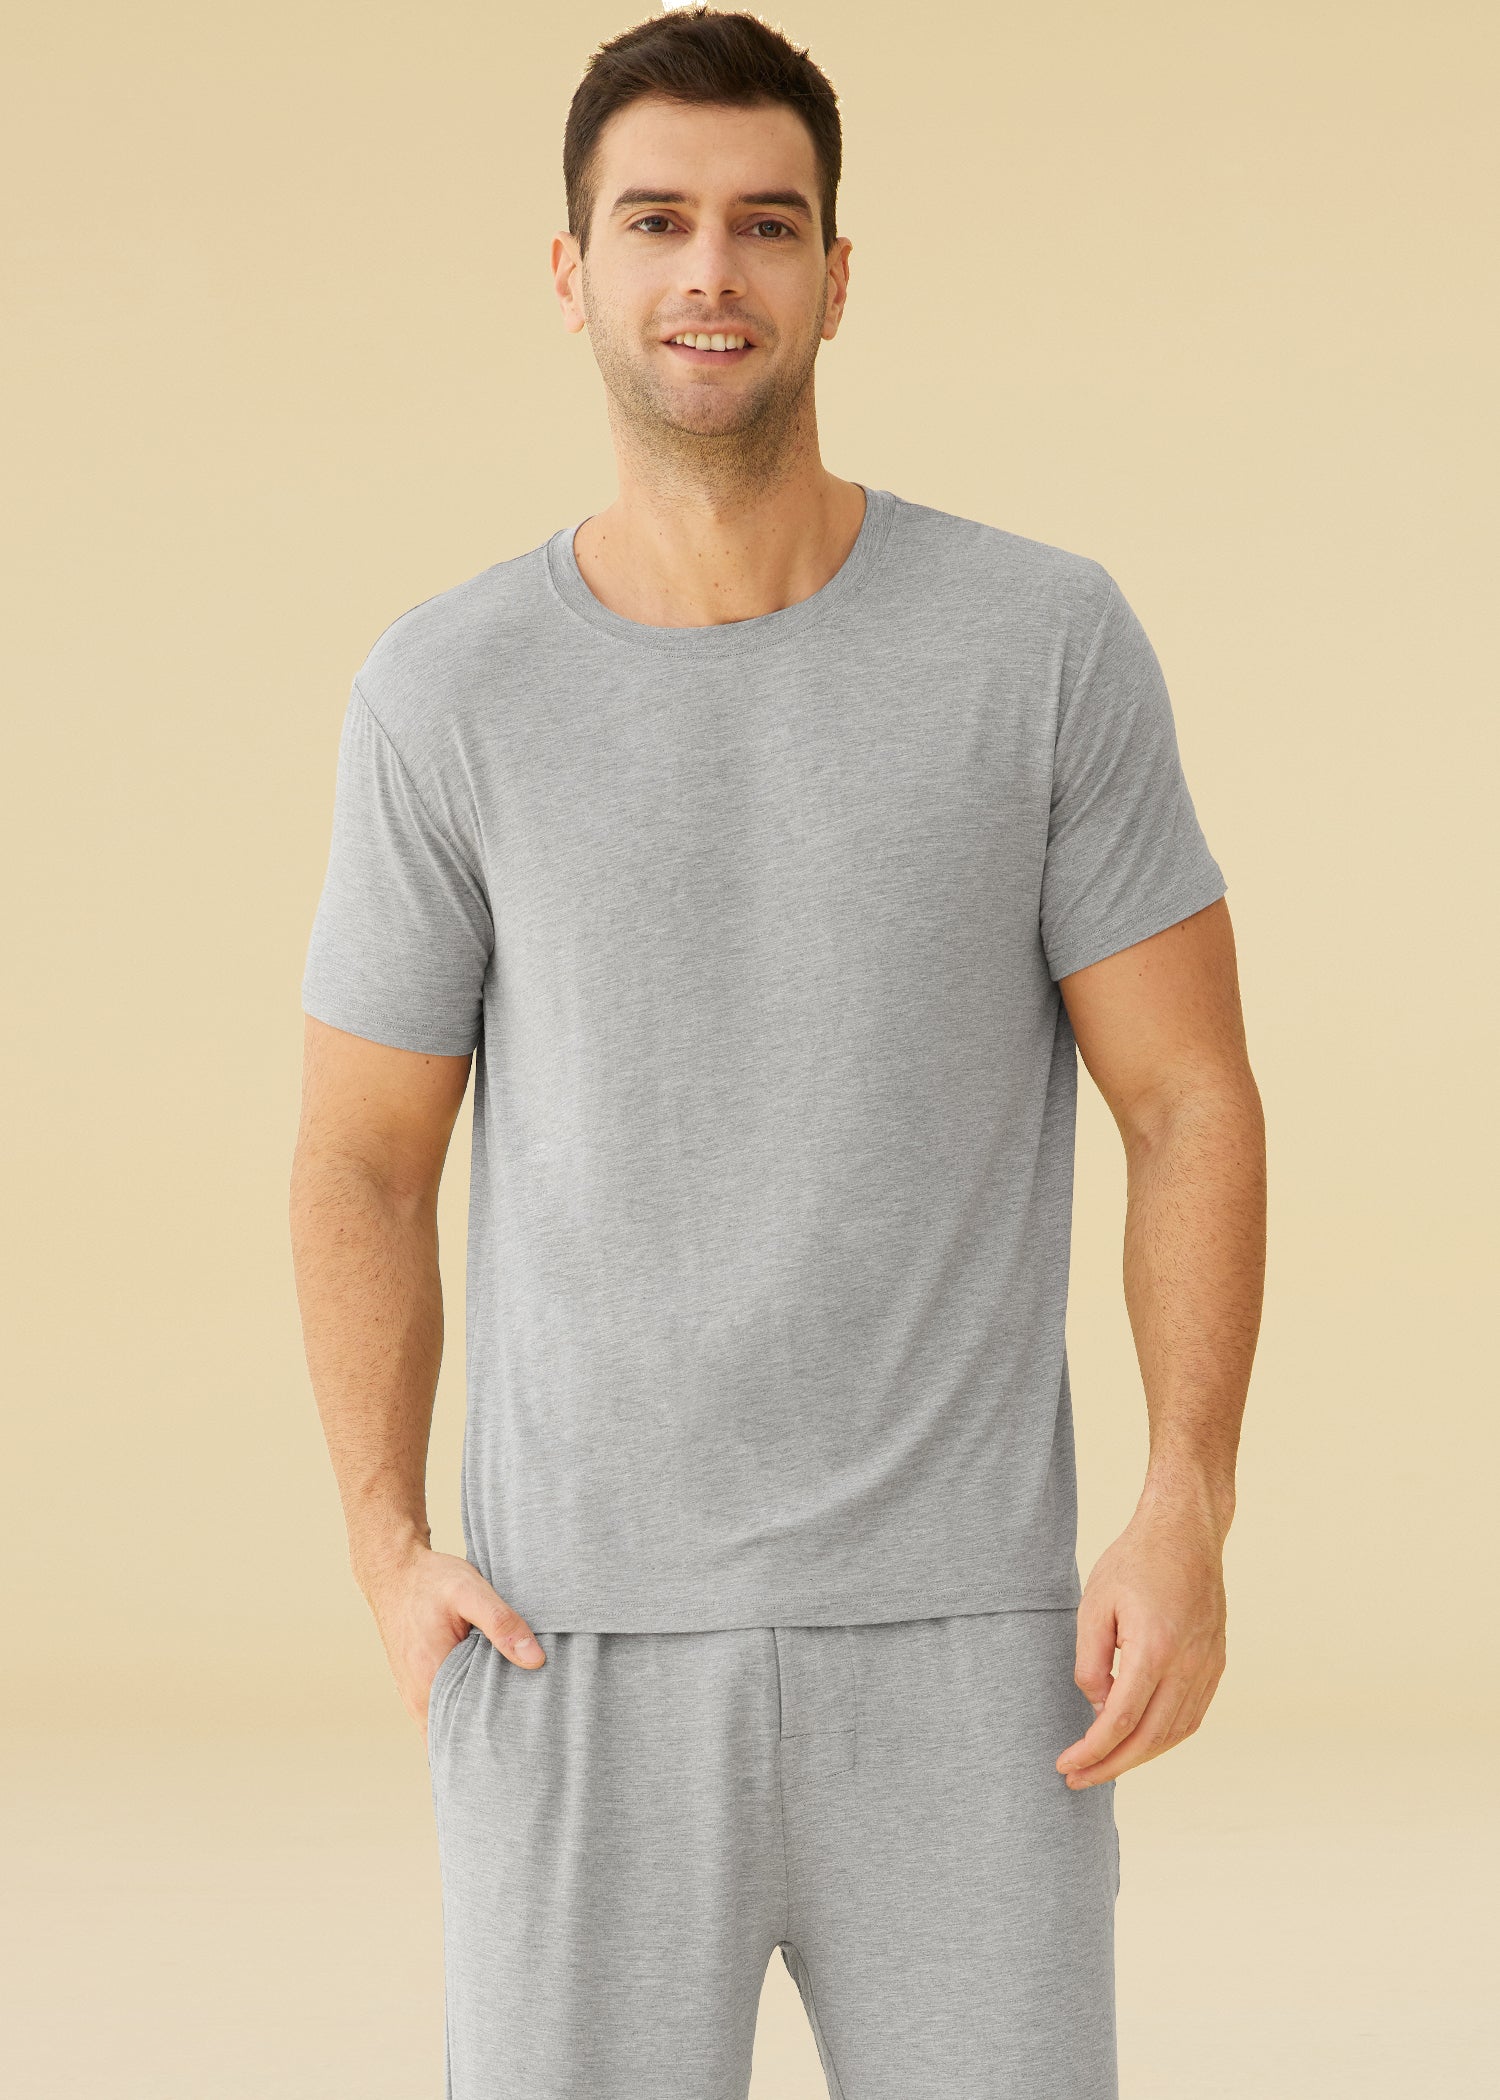 Men's Plaid Nightshirt Cotton Sleep Shirt – Latuza